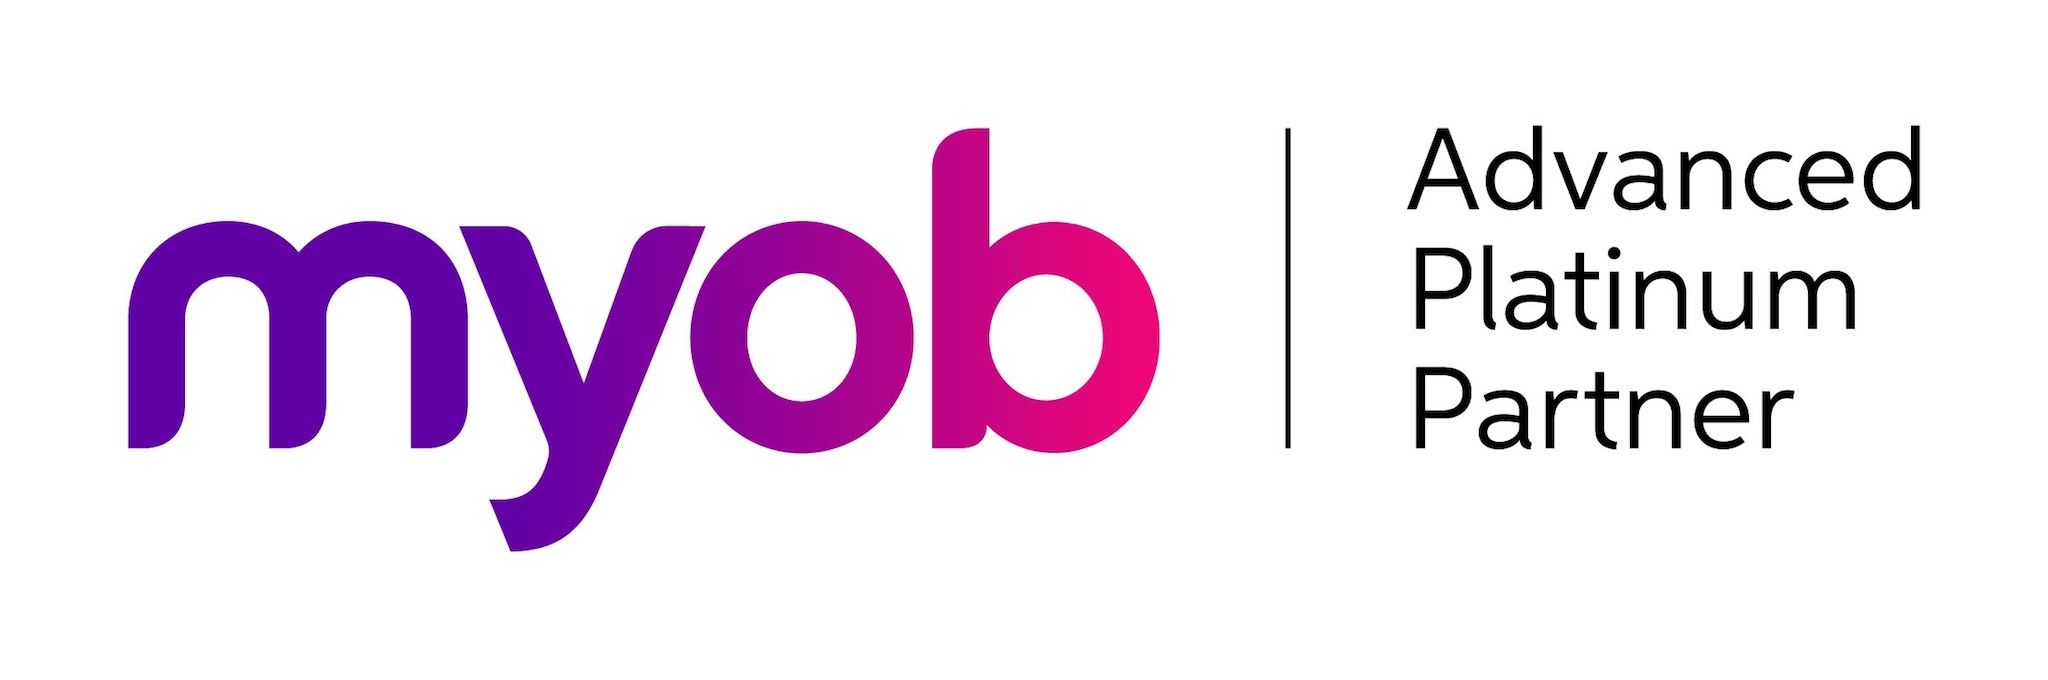 MYOB Advanced Platinum Partner Sydney Melbourne and Brisbane Leverage MYOB Advanced